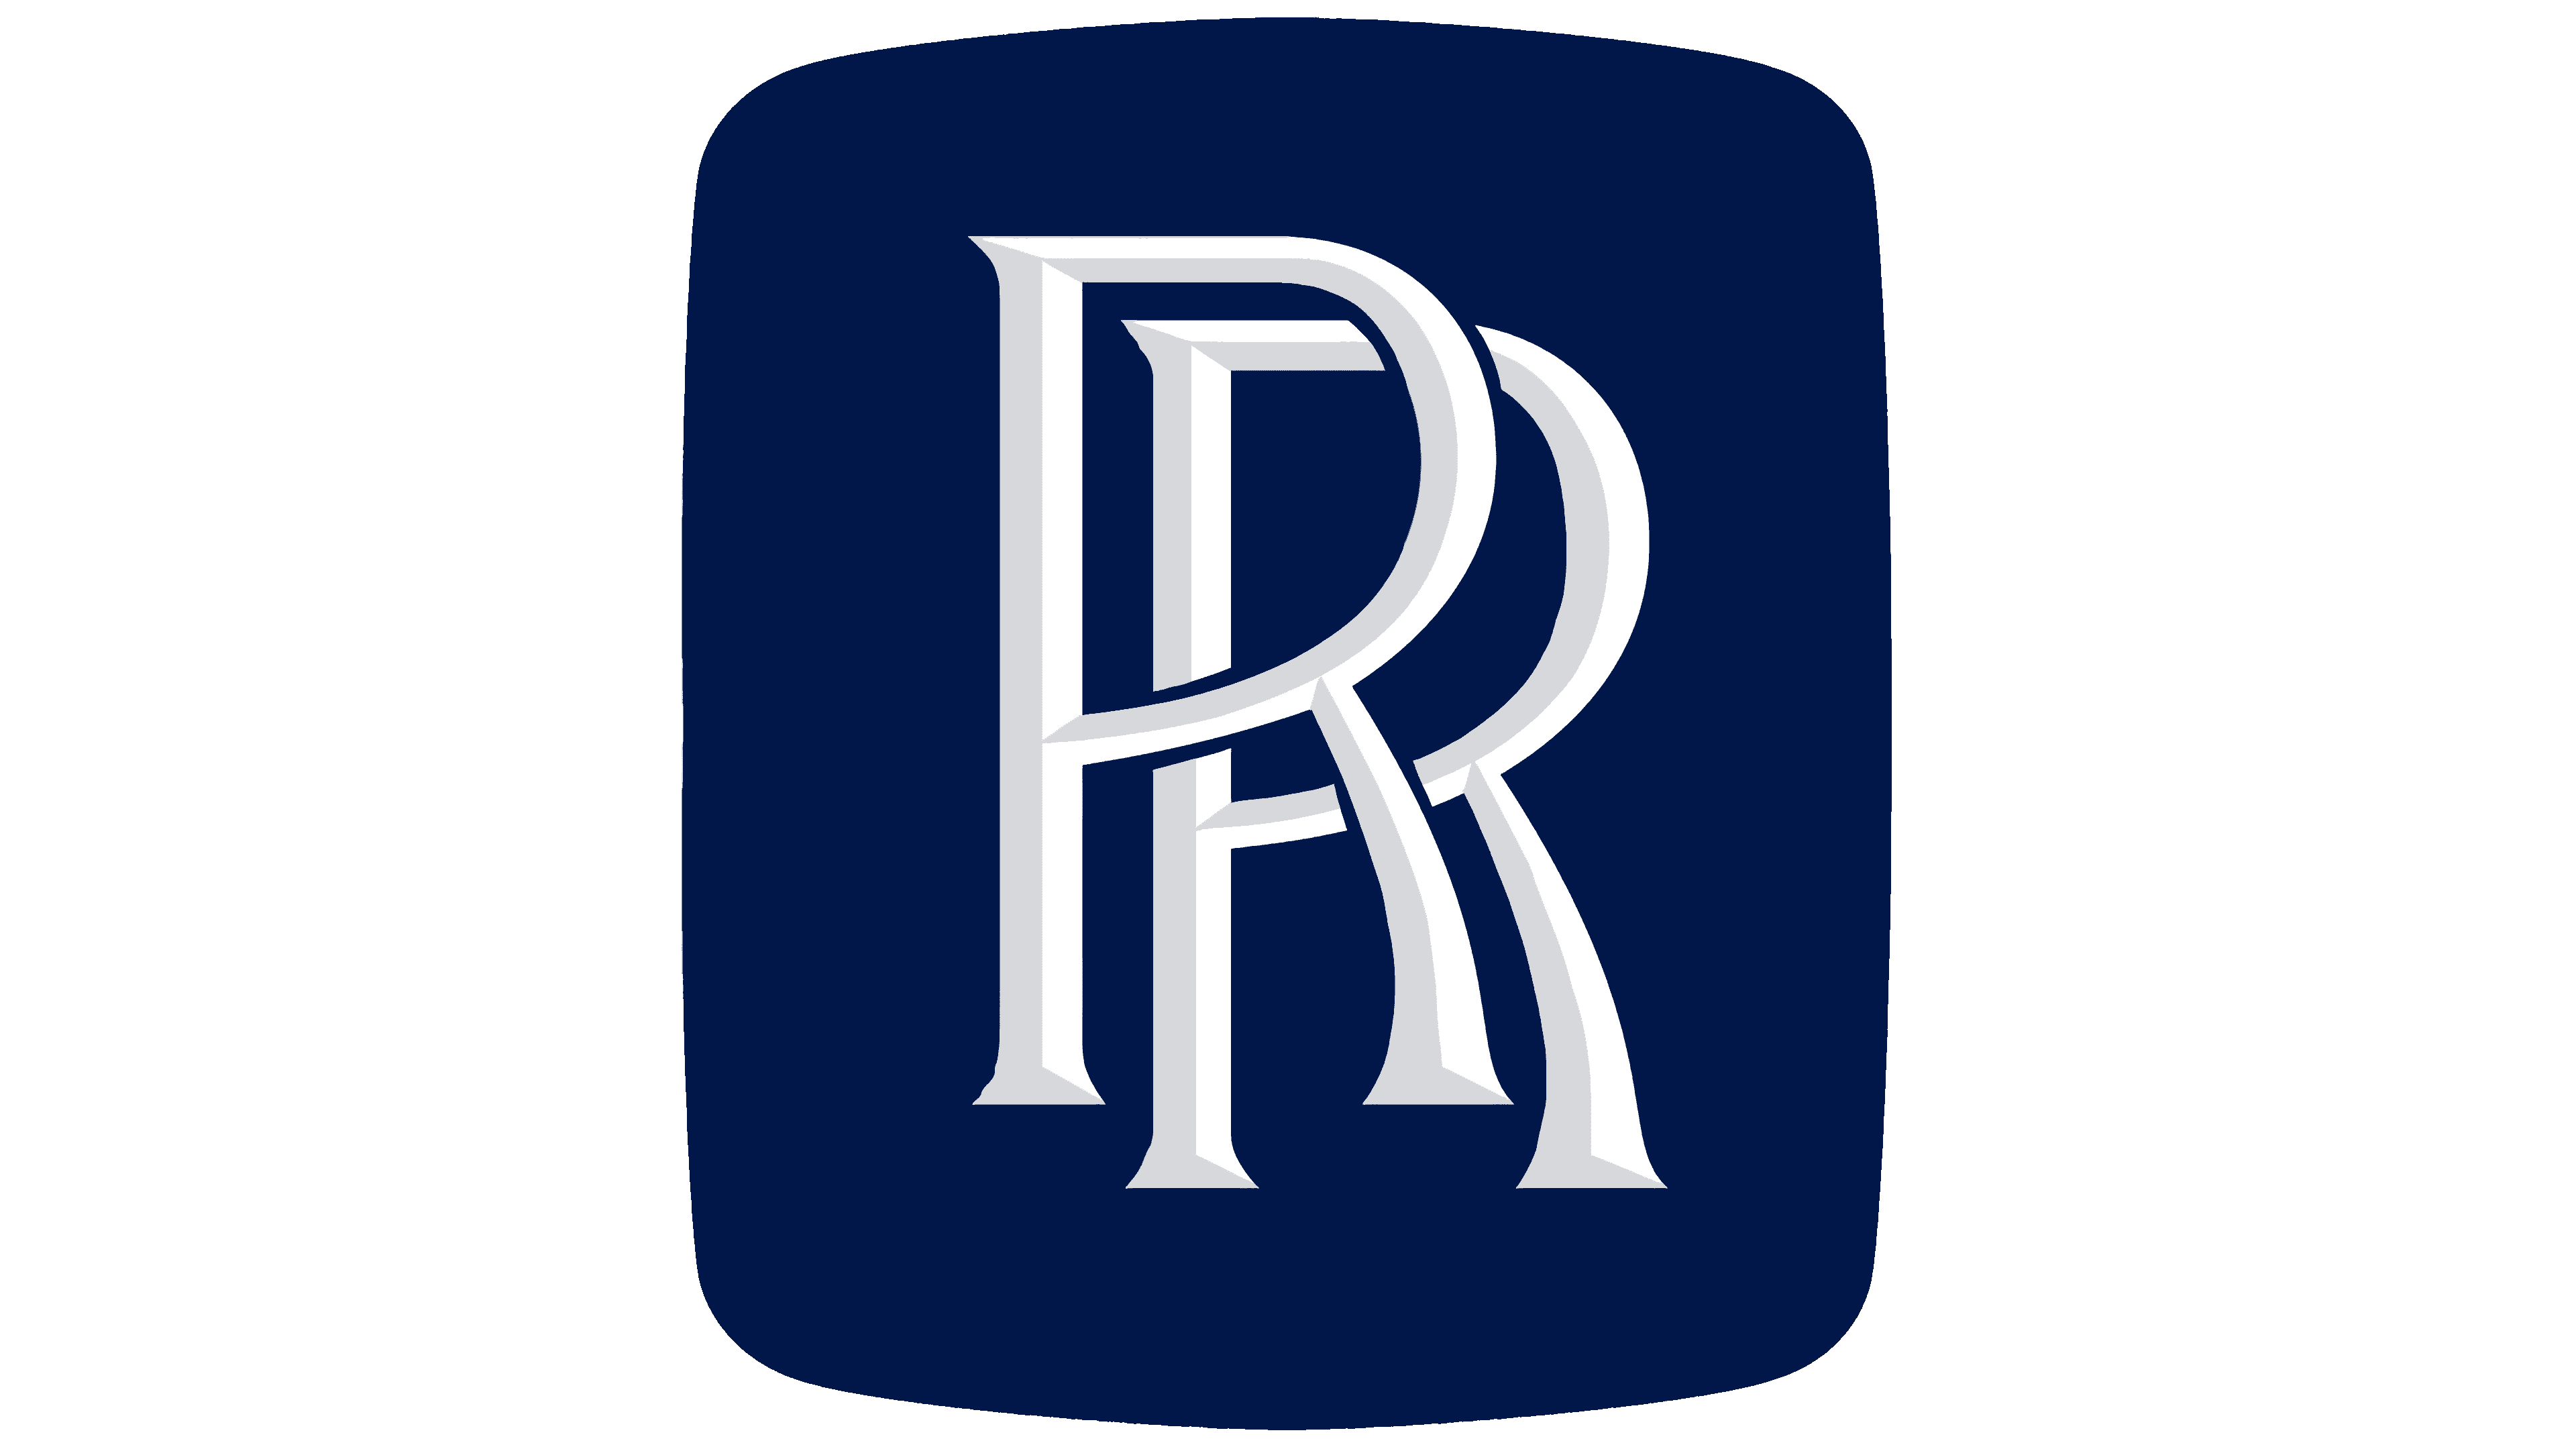 Rolls royce brand logo car symbol with name black Vector Image